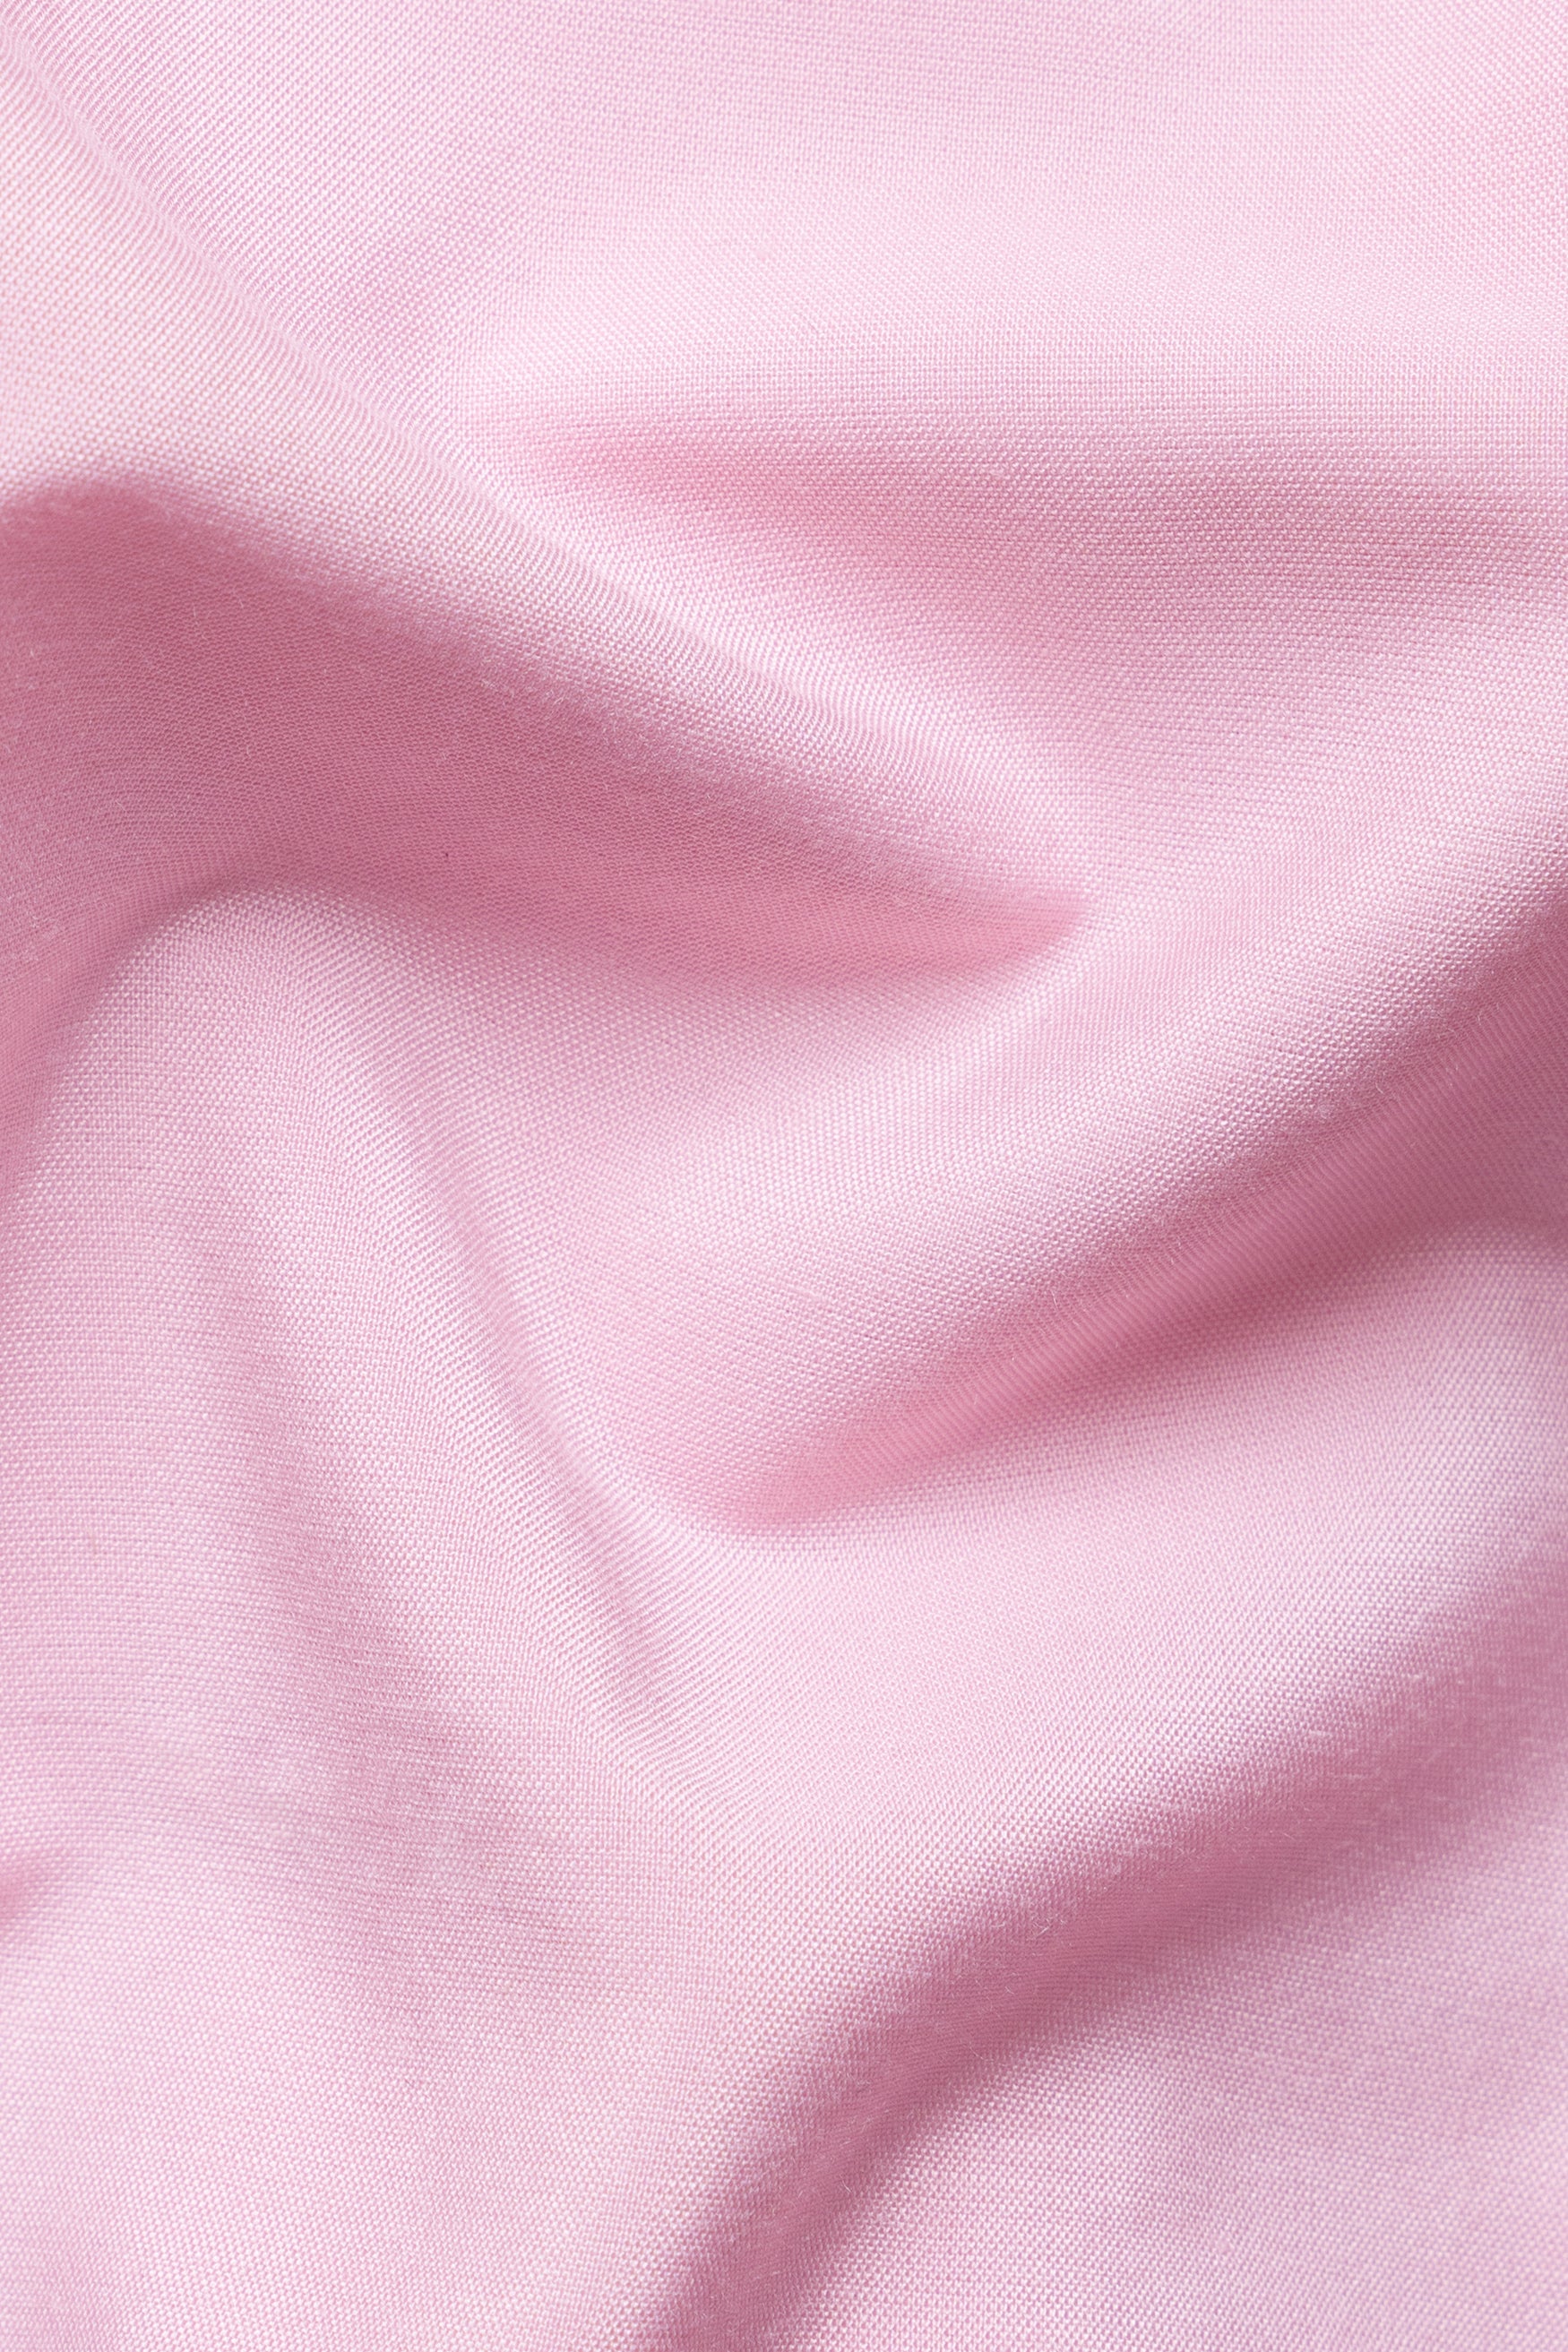 Azalea Pink Kurta Set with Bright White and Carnation Pink Leaves Thread Embroidered Designer Nehru Jacket KPNJ035-44,  KPNJ035-46,  KPNJ035-48,  KPNJ035-50,  KPNJ035-52,  KPNJ035-54,  KPNJ035-56,  KPNJ035-58,  KPNJ035-60